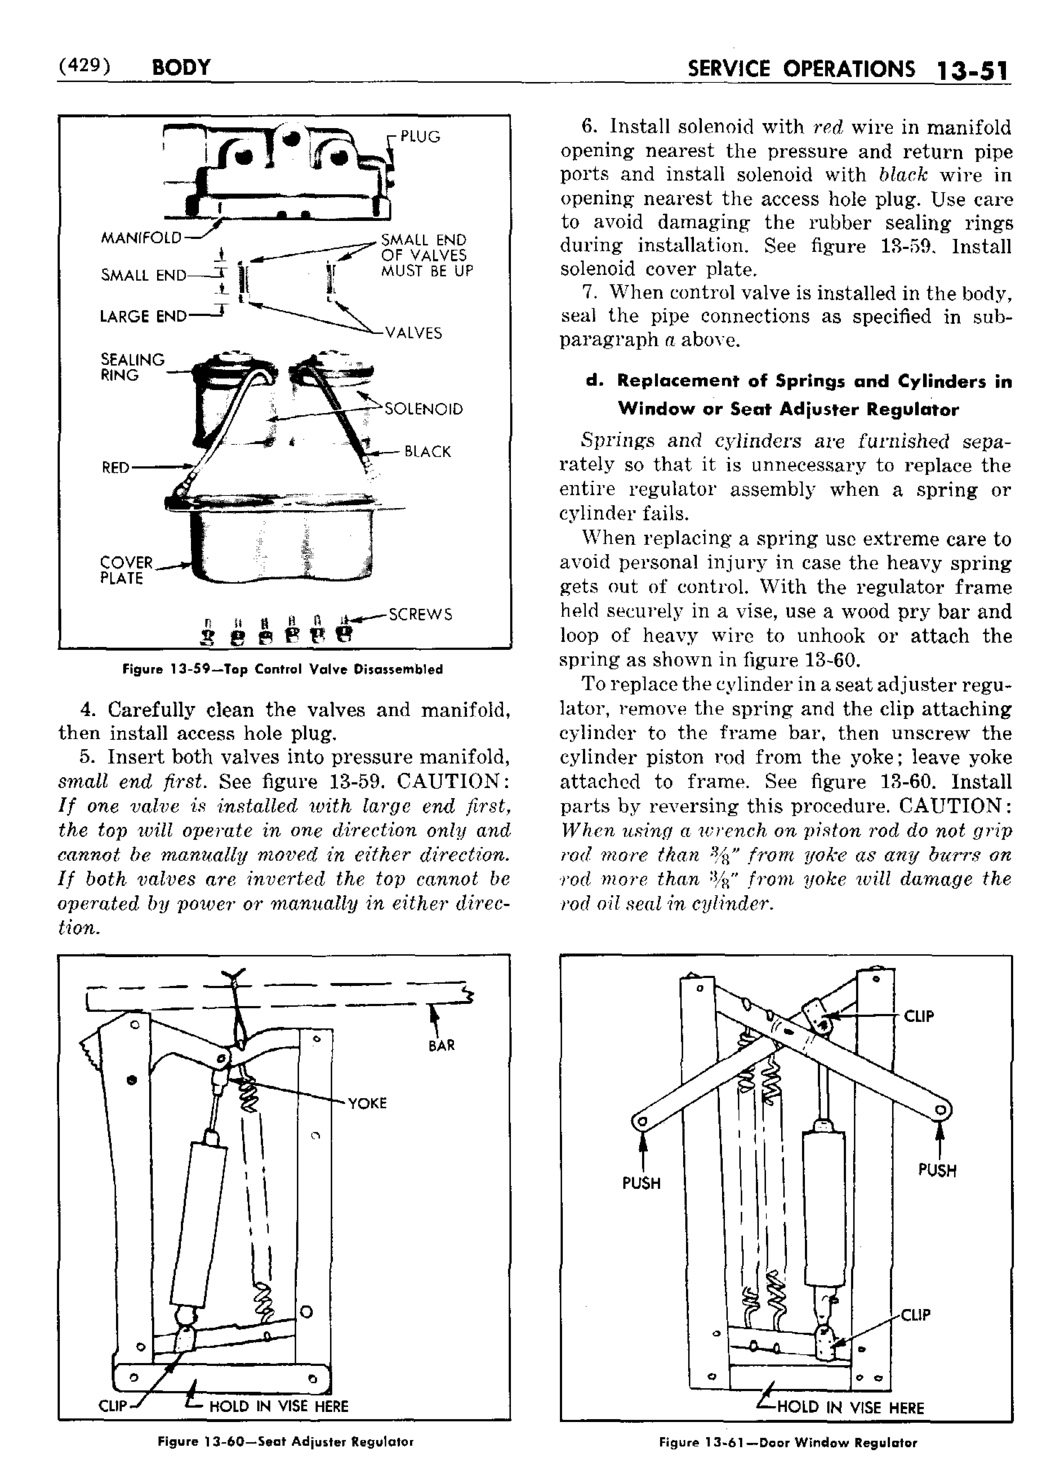 n_14 1950 Buick Shop Manual - Body-051-051.jpg